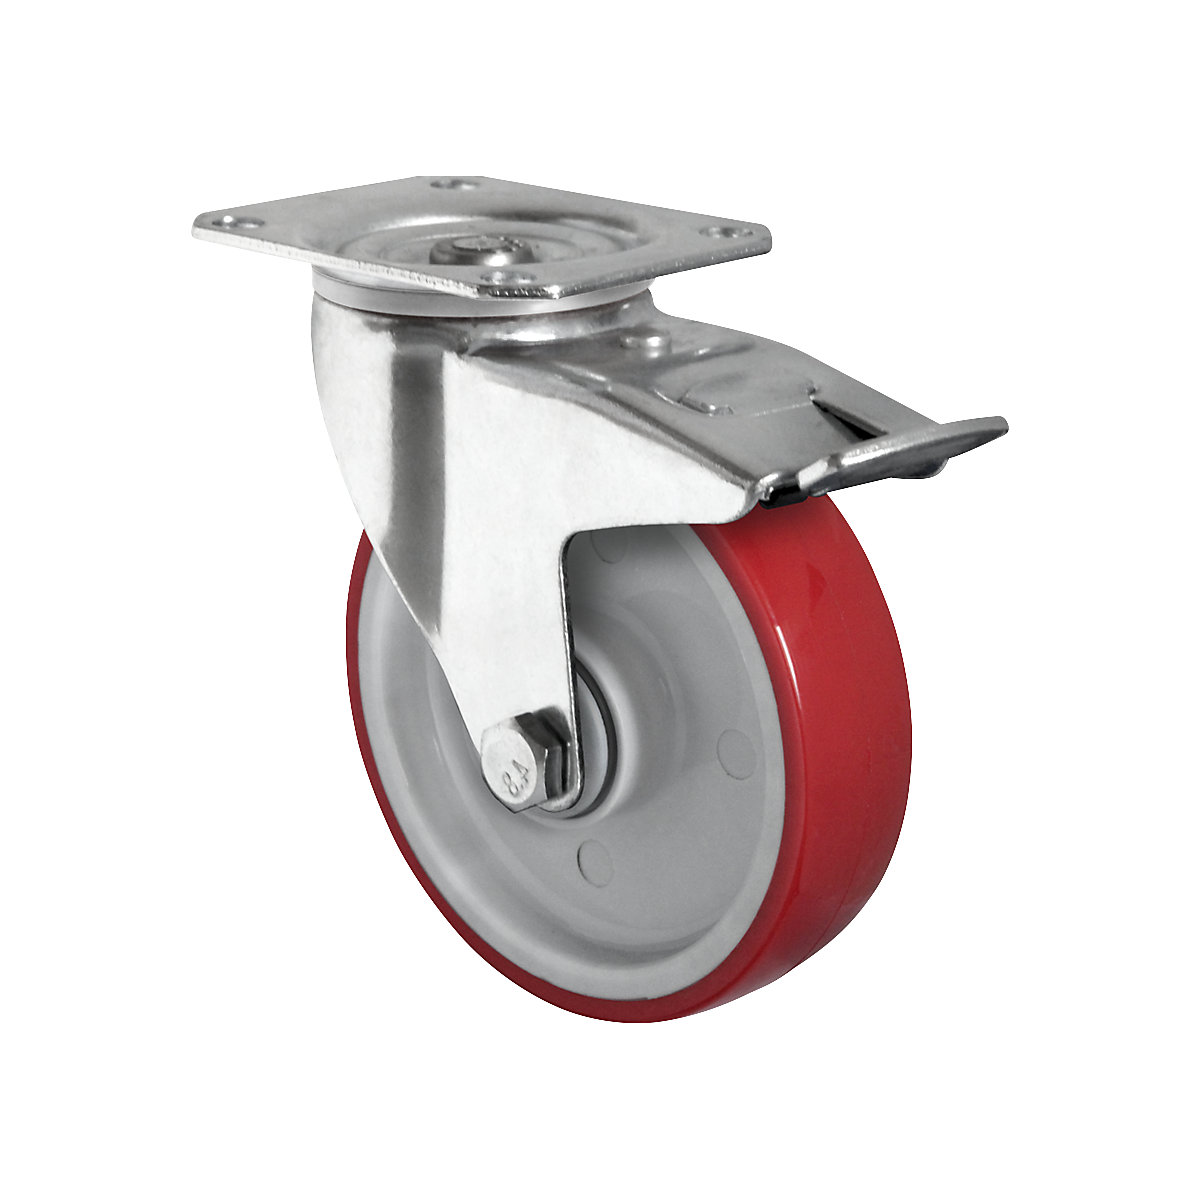 EUROKRAFTbasic – PU tyre, red on nylon rim, wheel Ø x width 200 x 46 mm, 2+ items, swivel castor with double stop